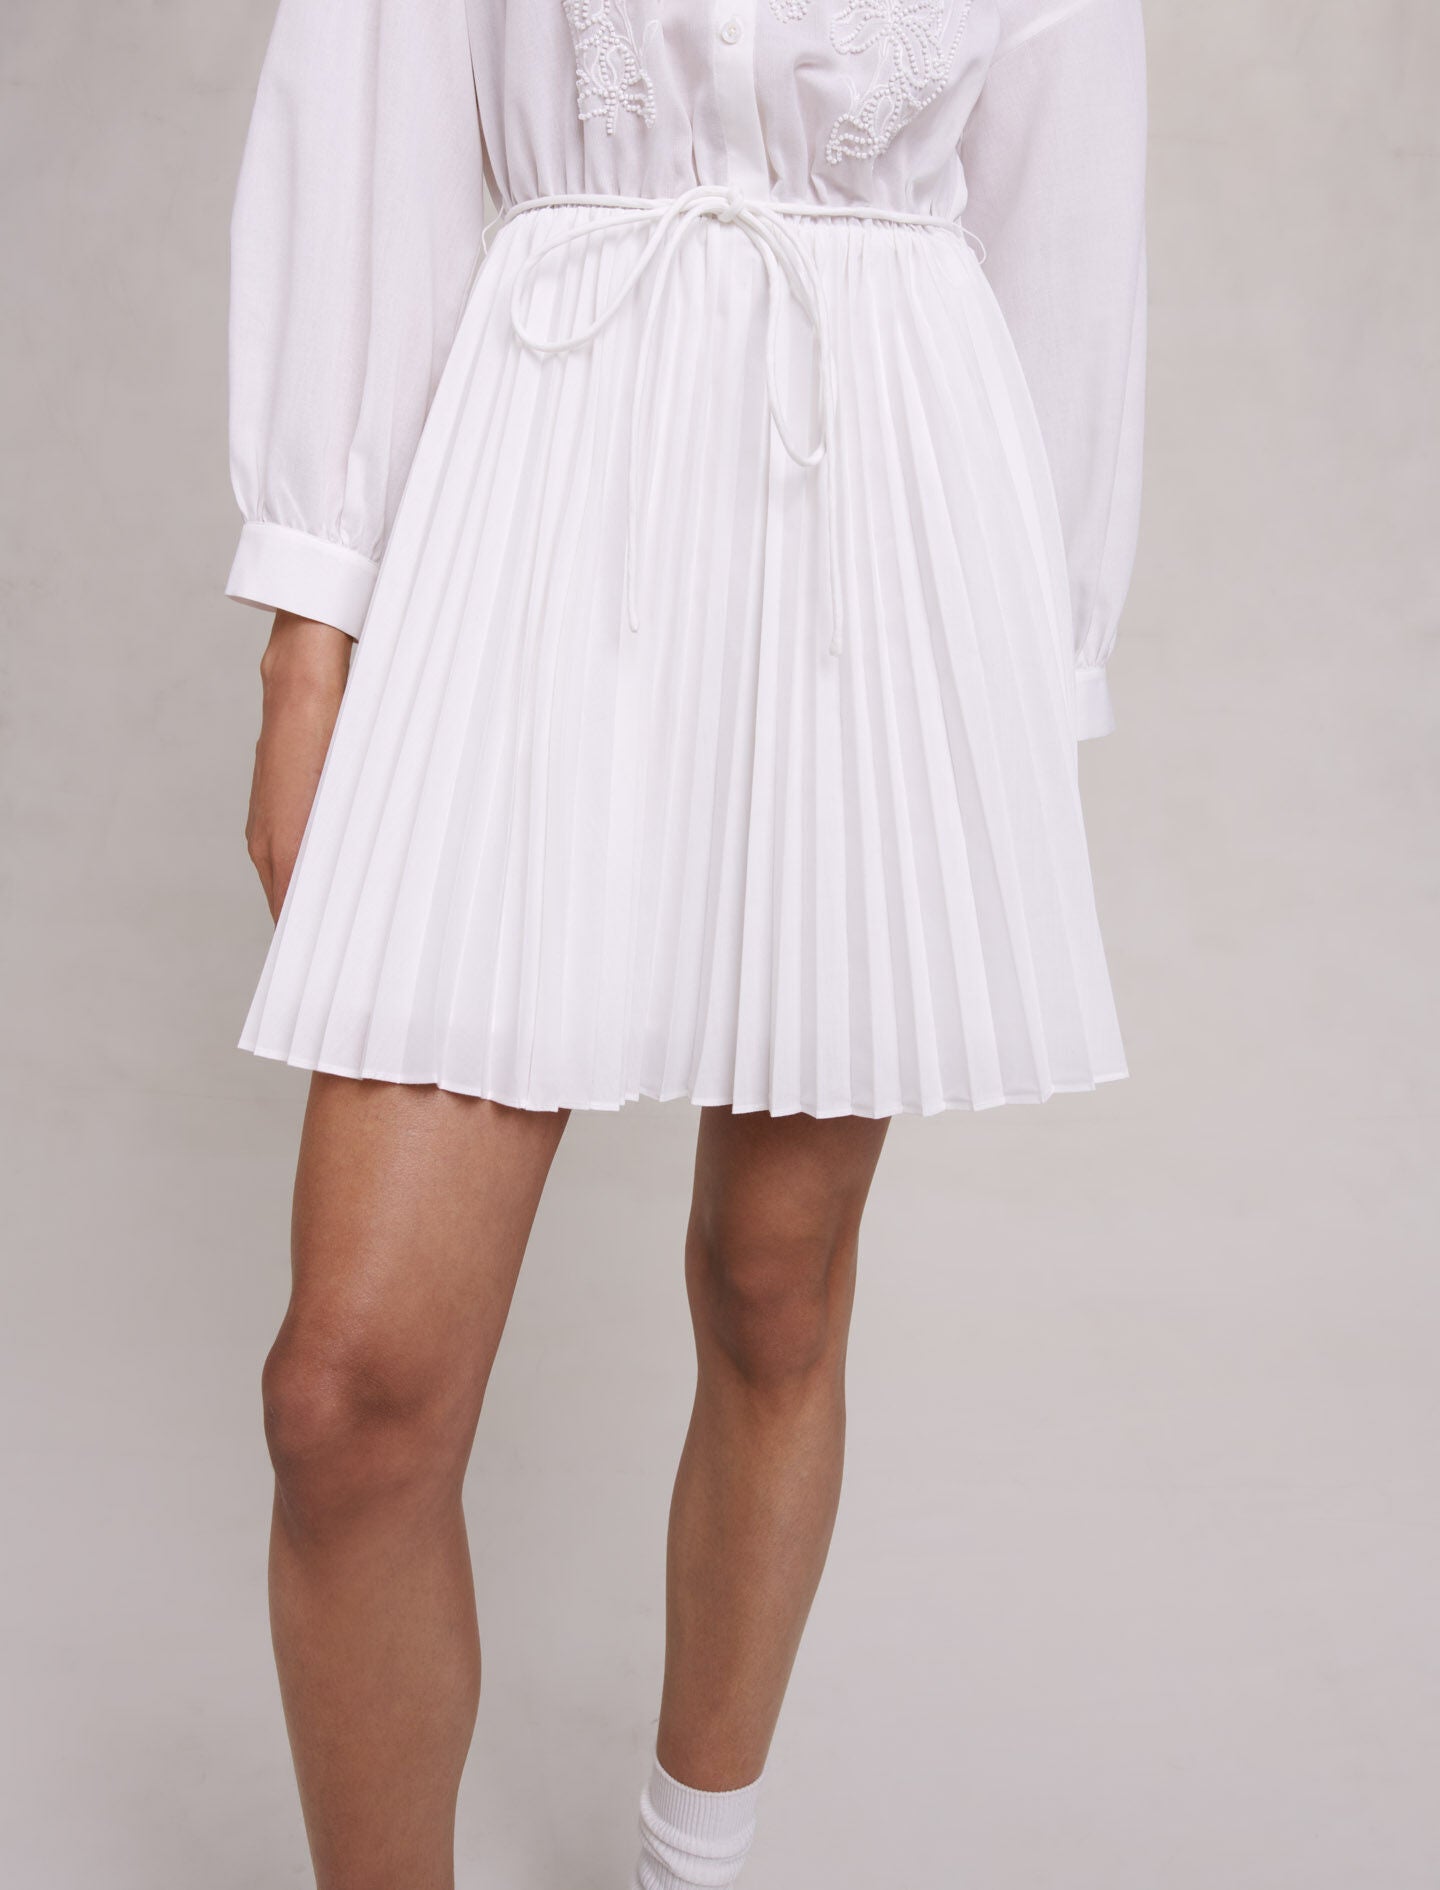 White-short shirt dress